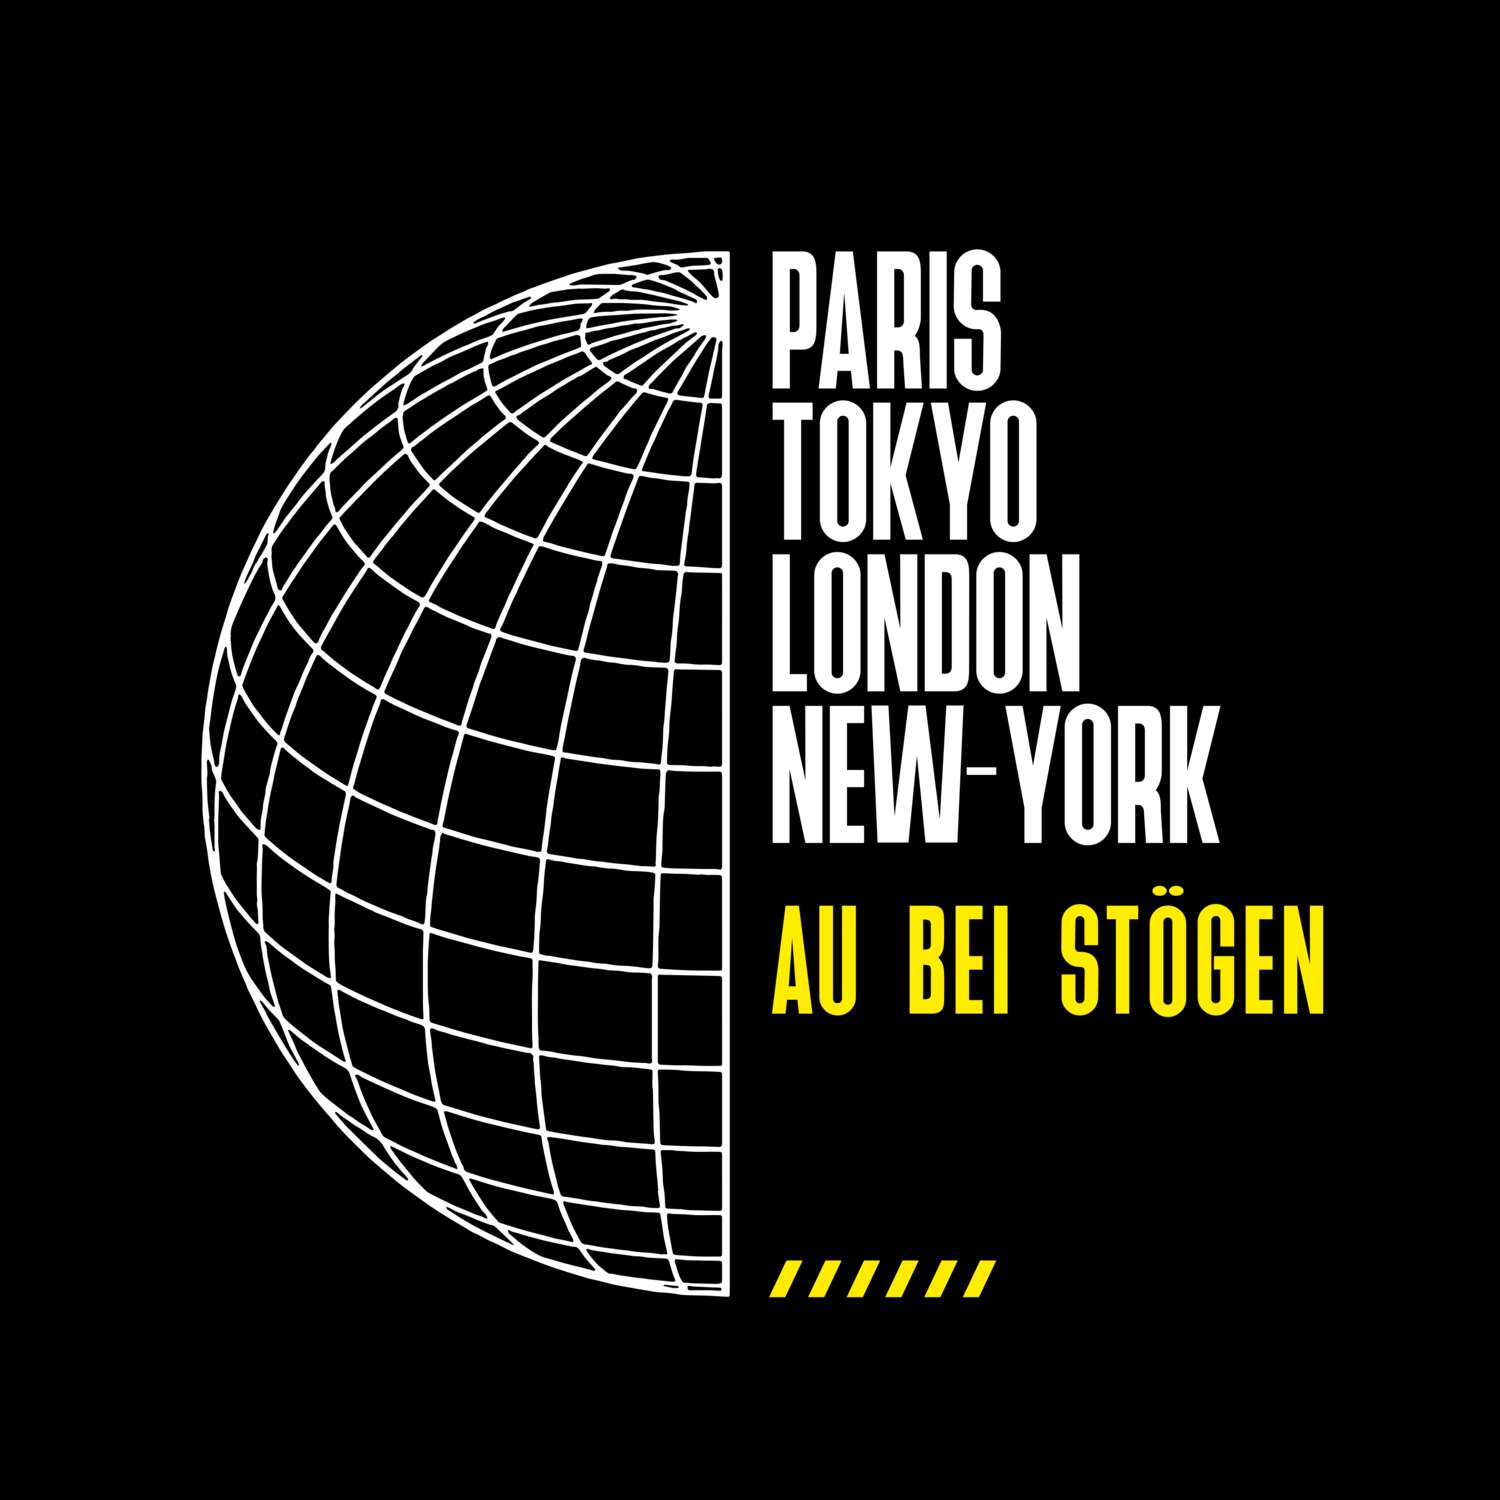 Au bei Stögen T-Shirt »Paris Tokyo London«